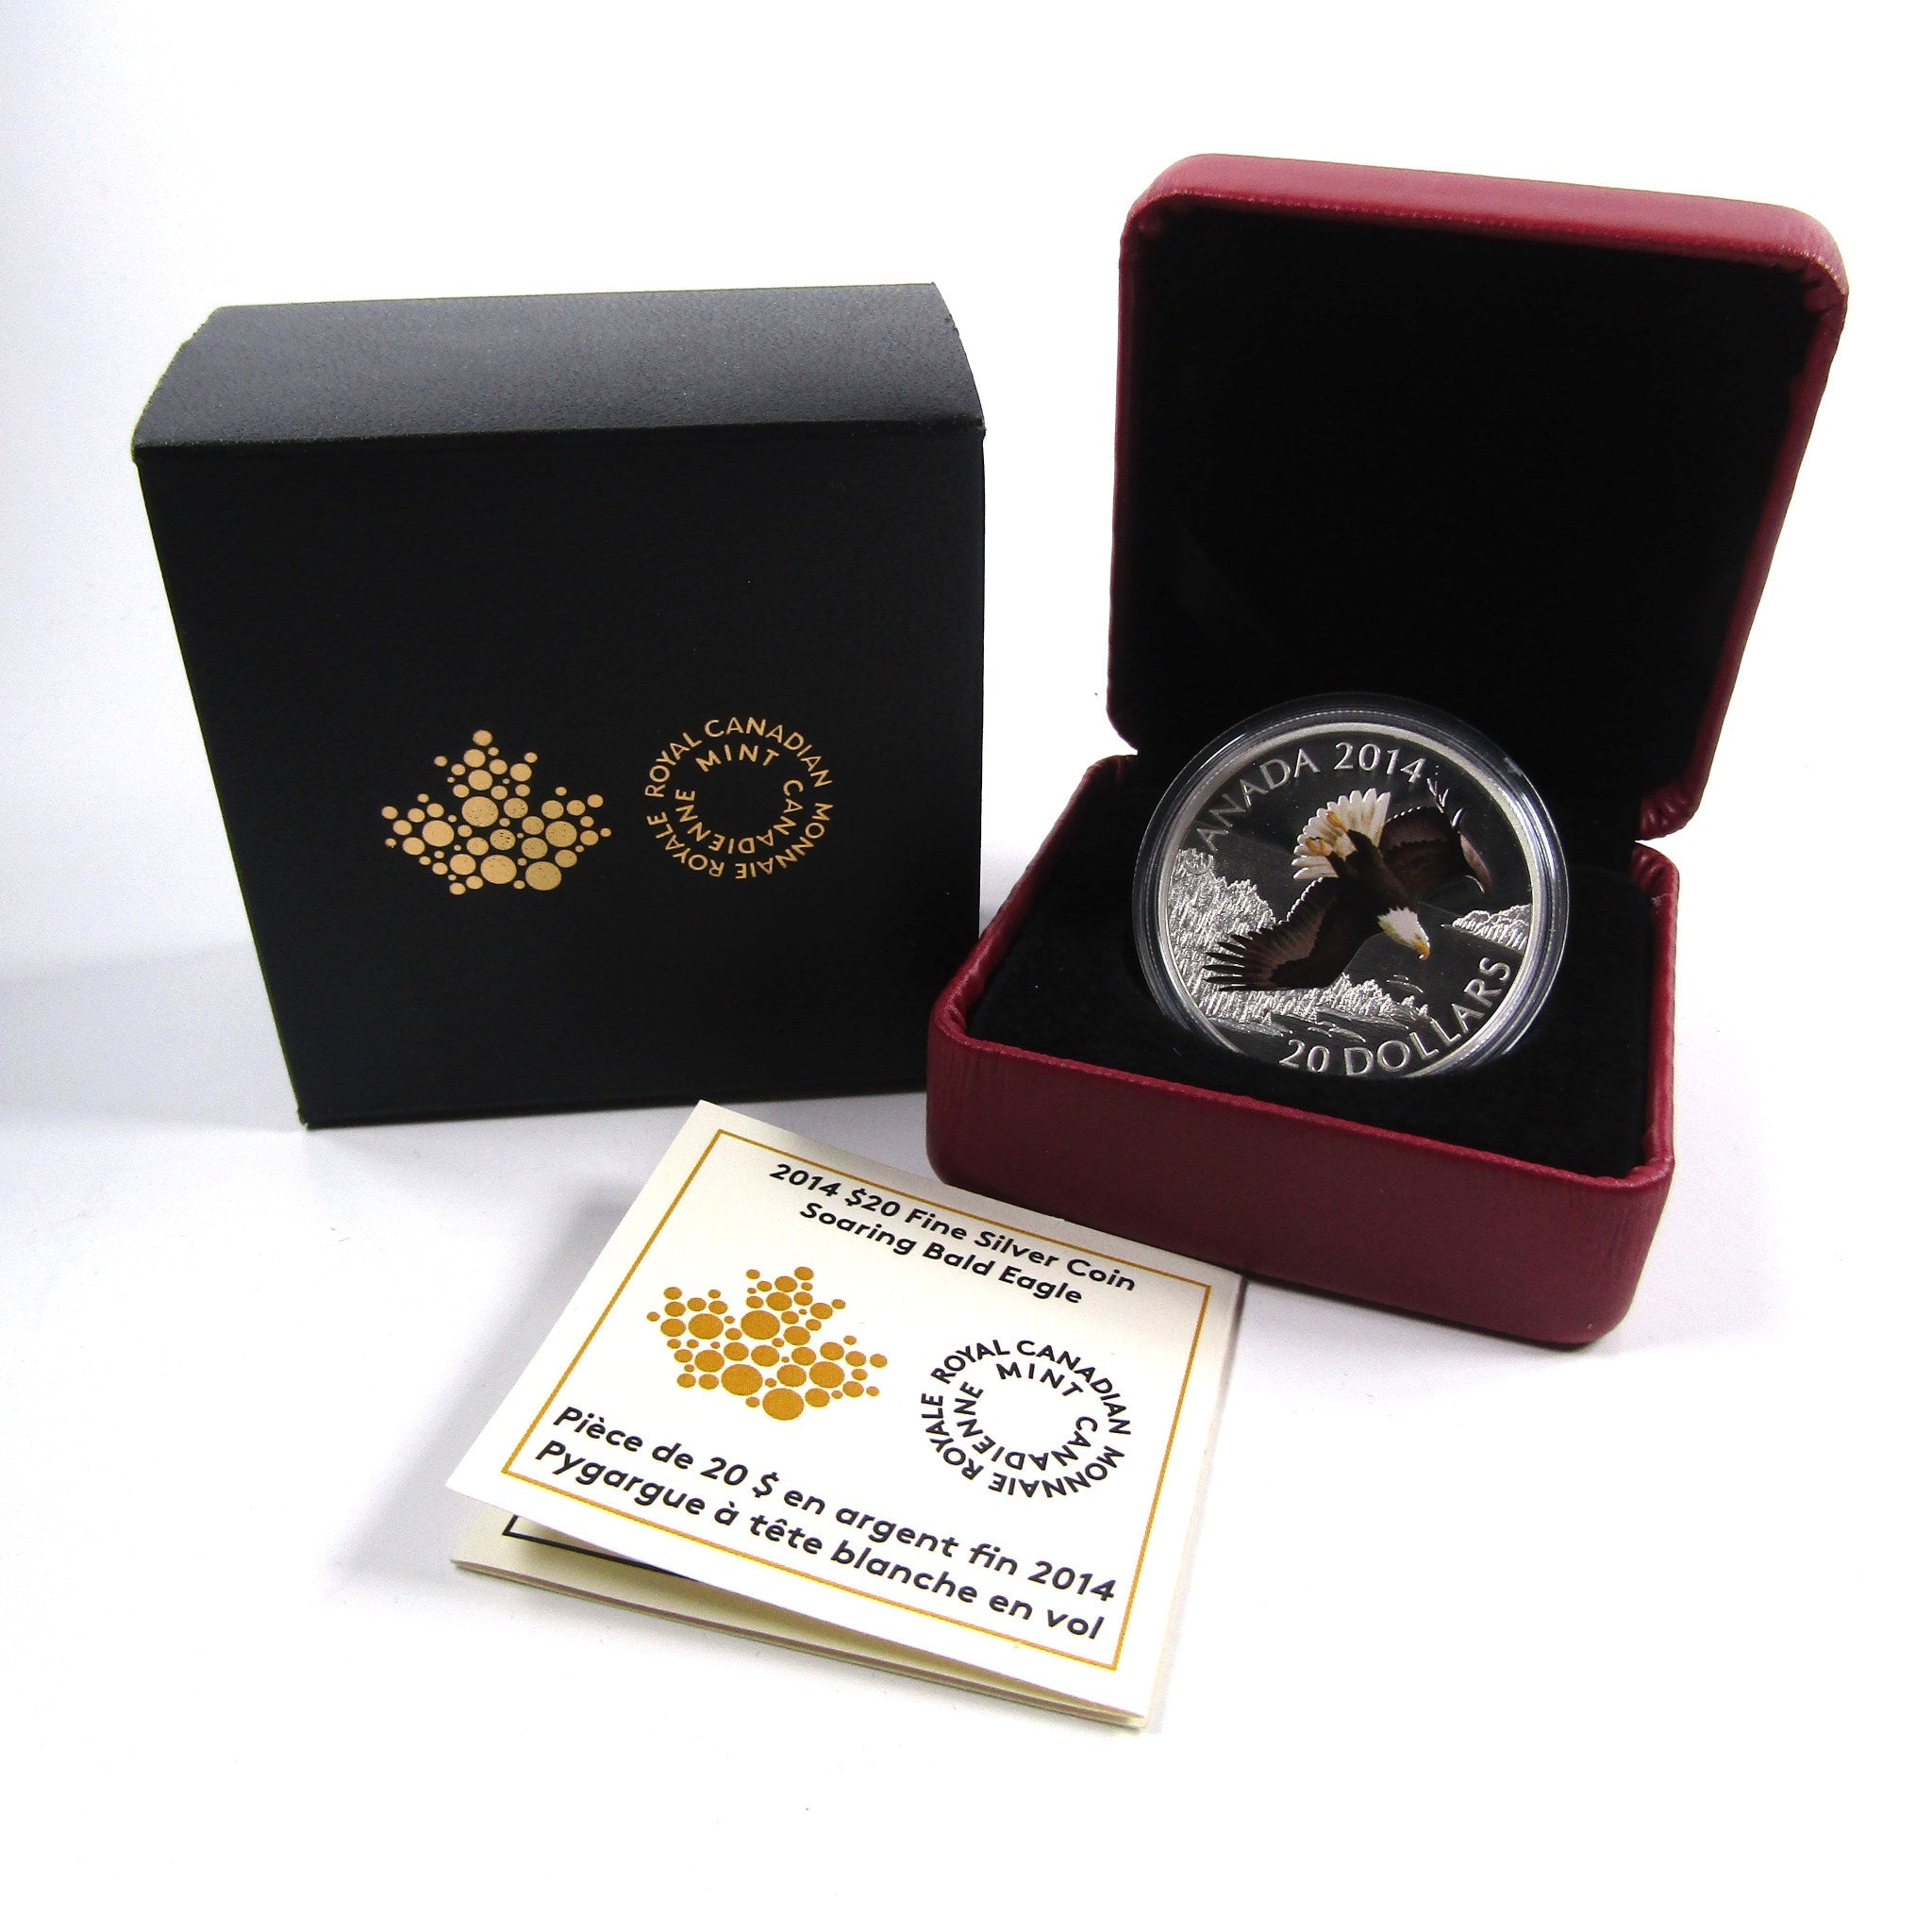 2014 Canadian Soaring Bald Eagle Silver Painted Proof COA SKU:CPC2061